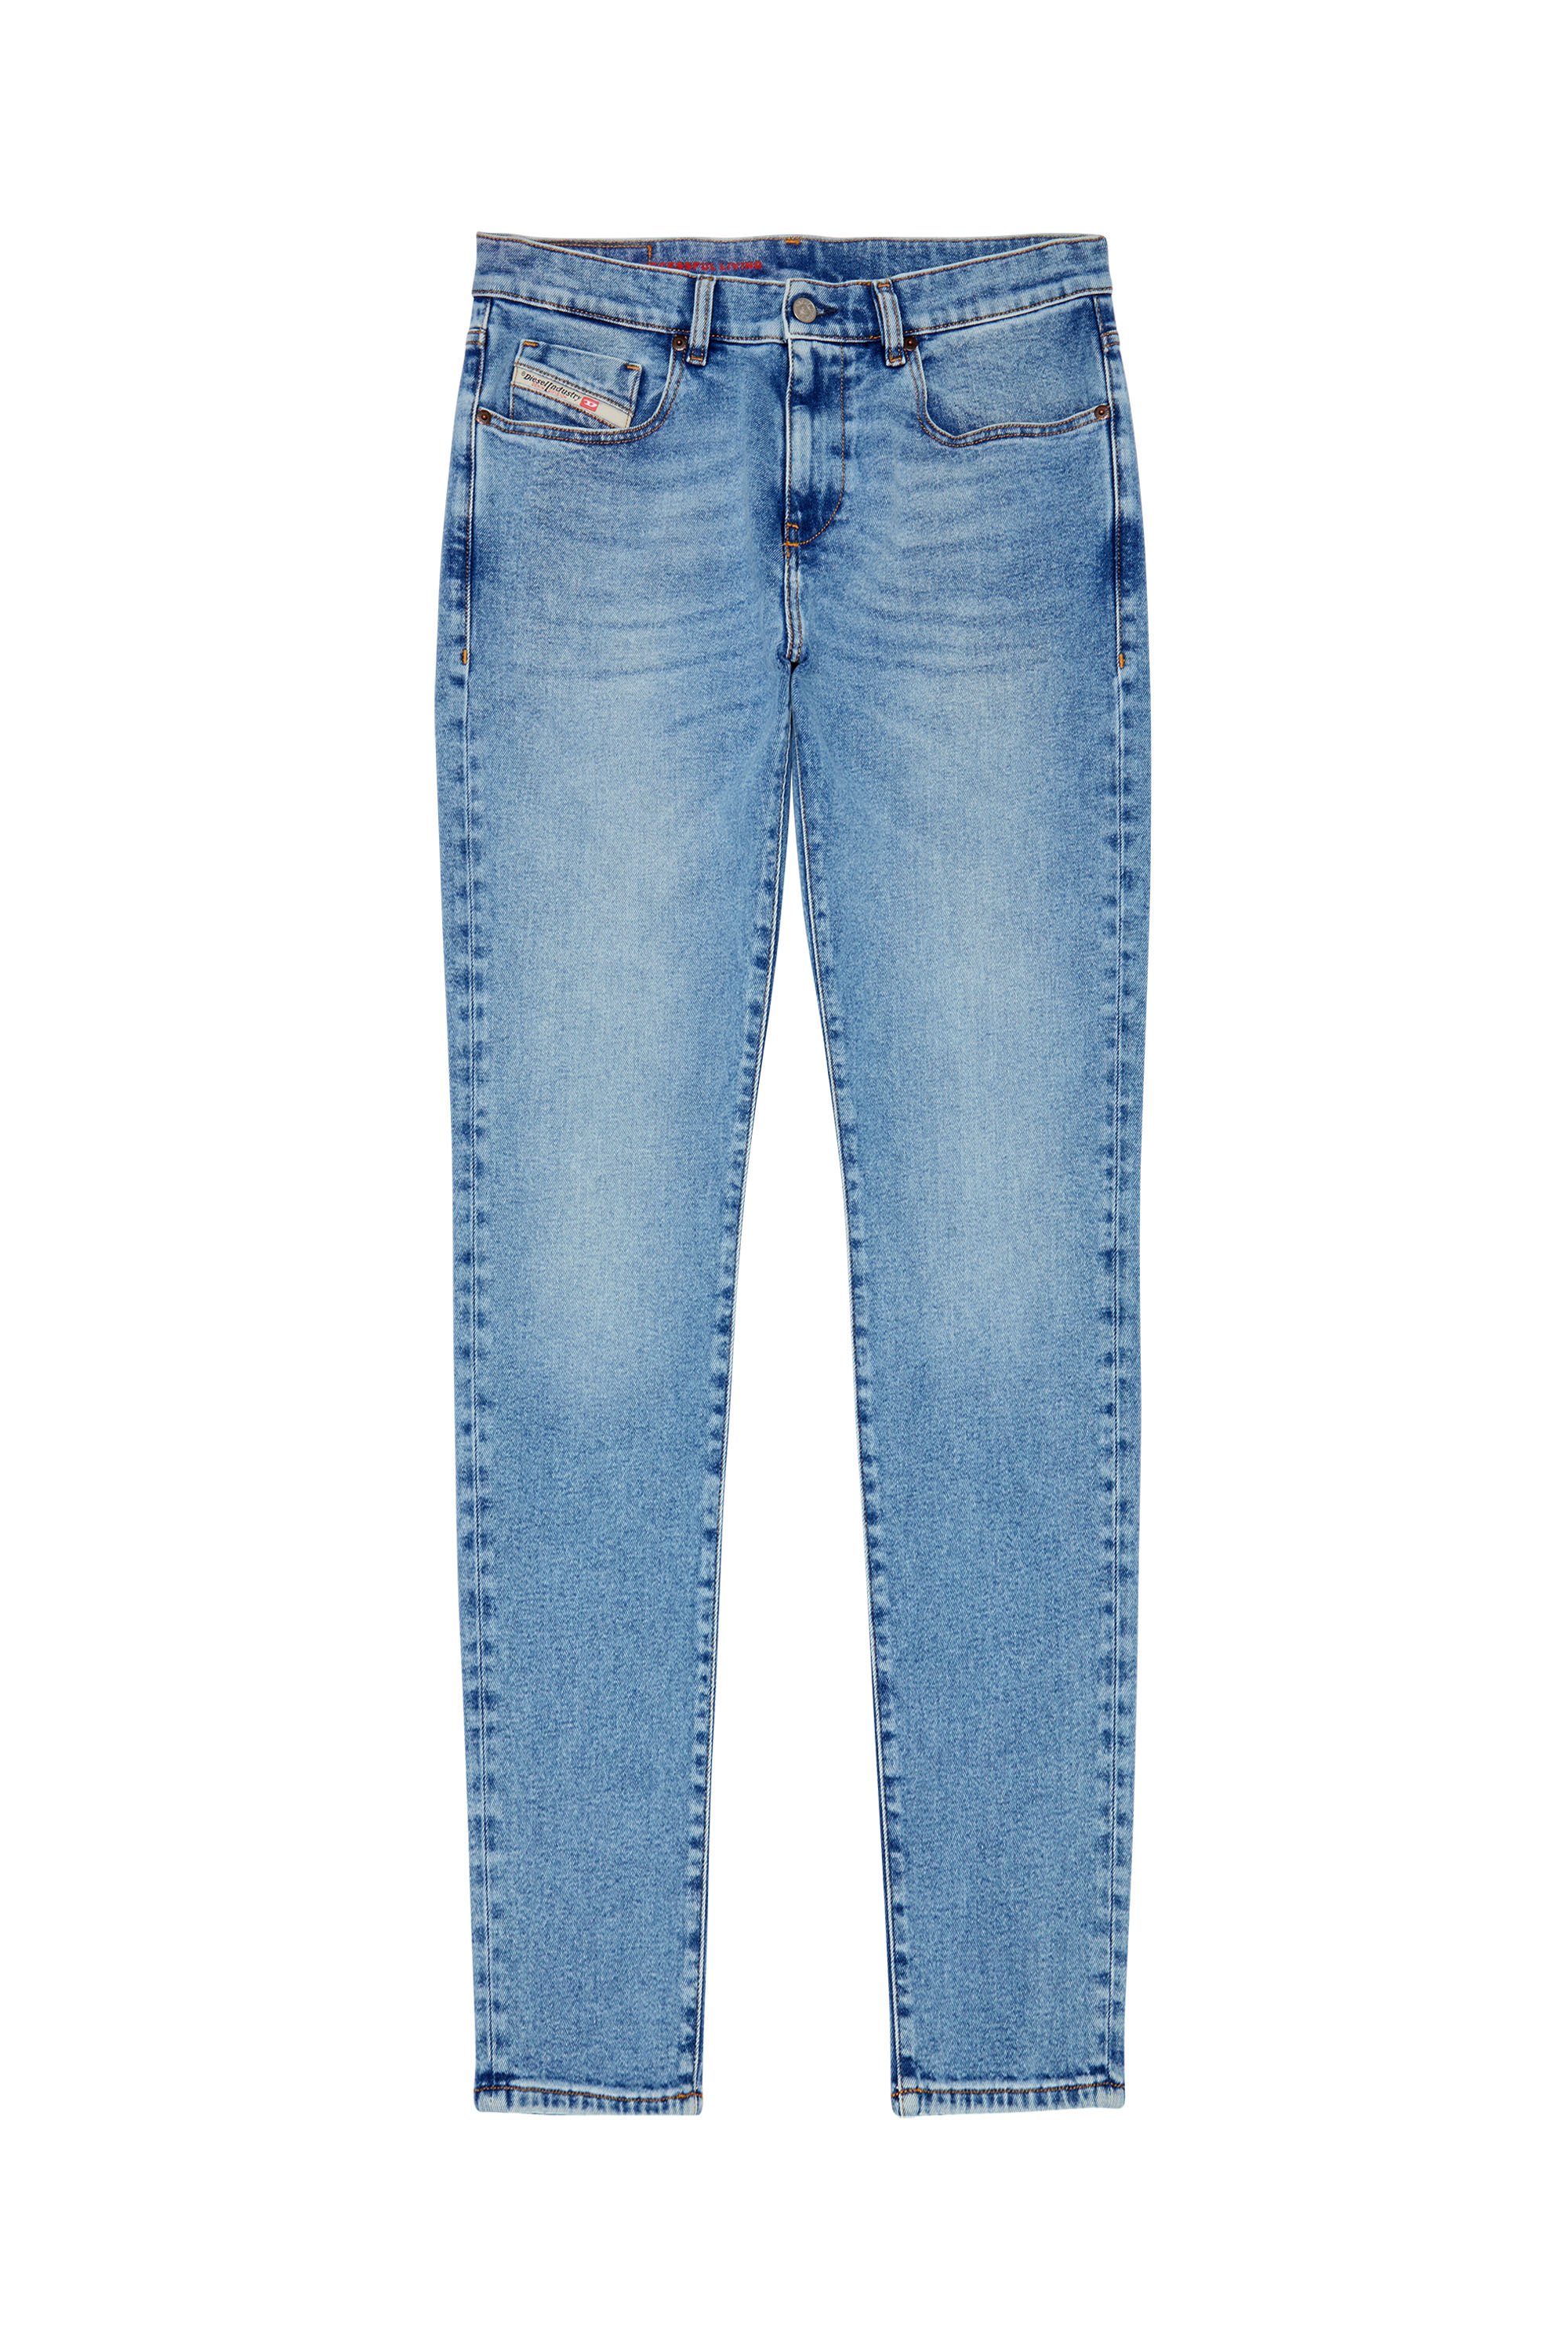 2019 D-STRUKT 09B92 Slim Jeans, Medium blue - Jeans